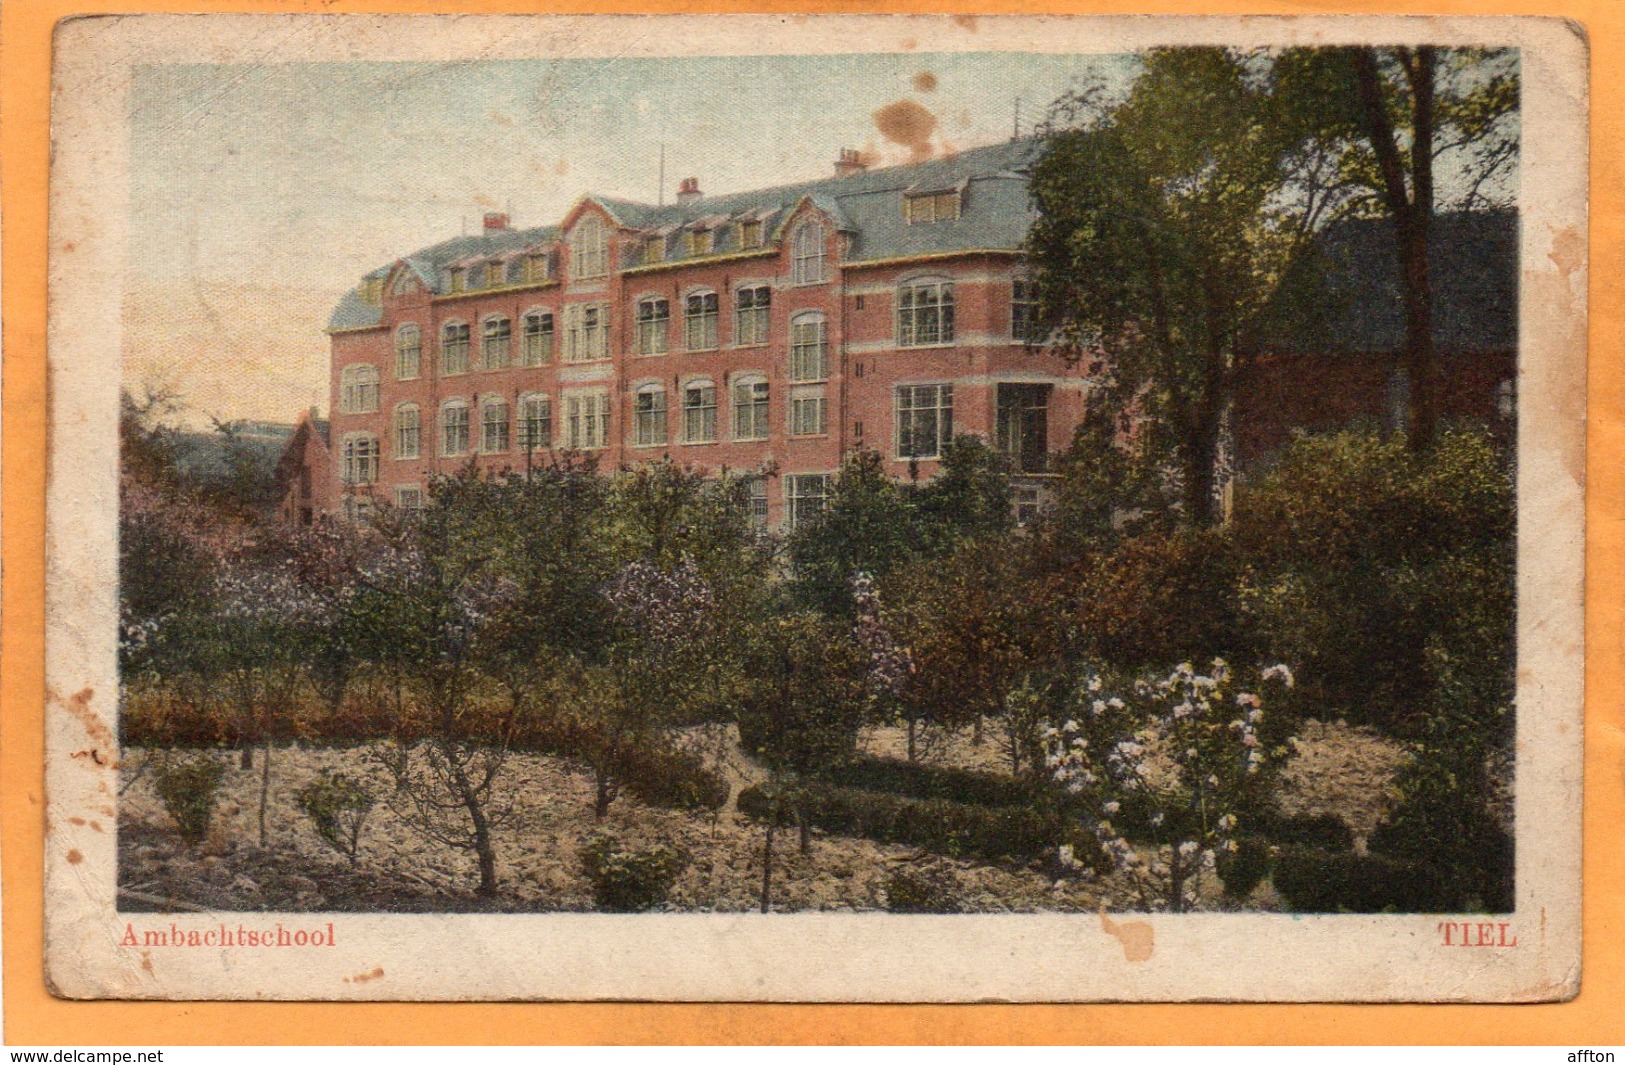 Tiel Netherlands 1908 Postcard - Tiel